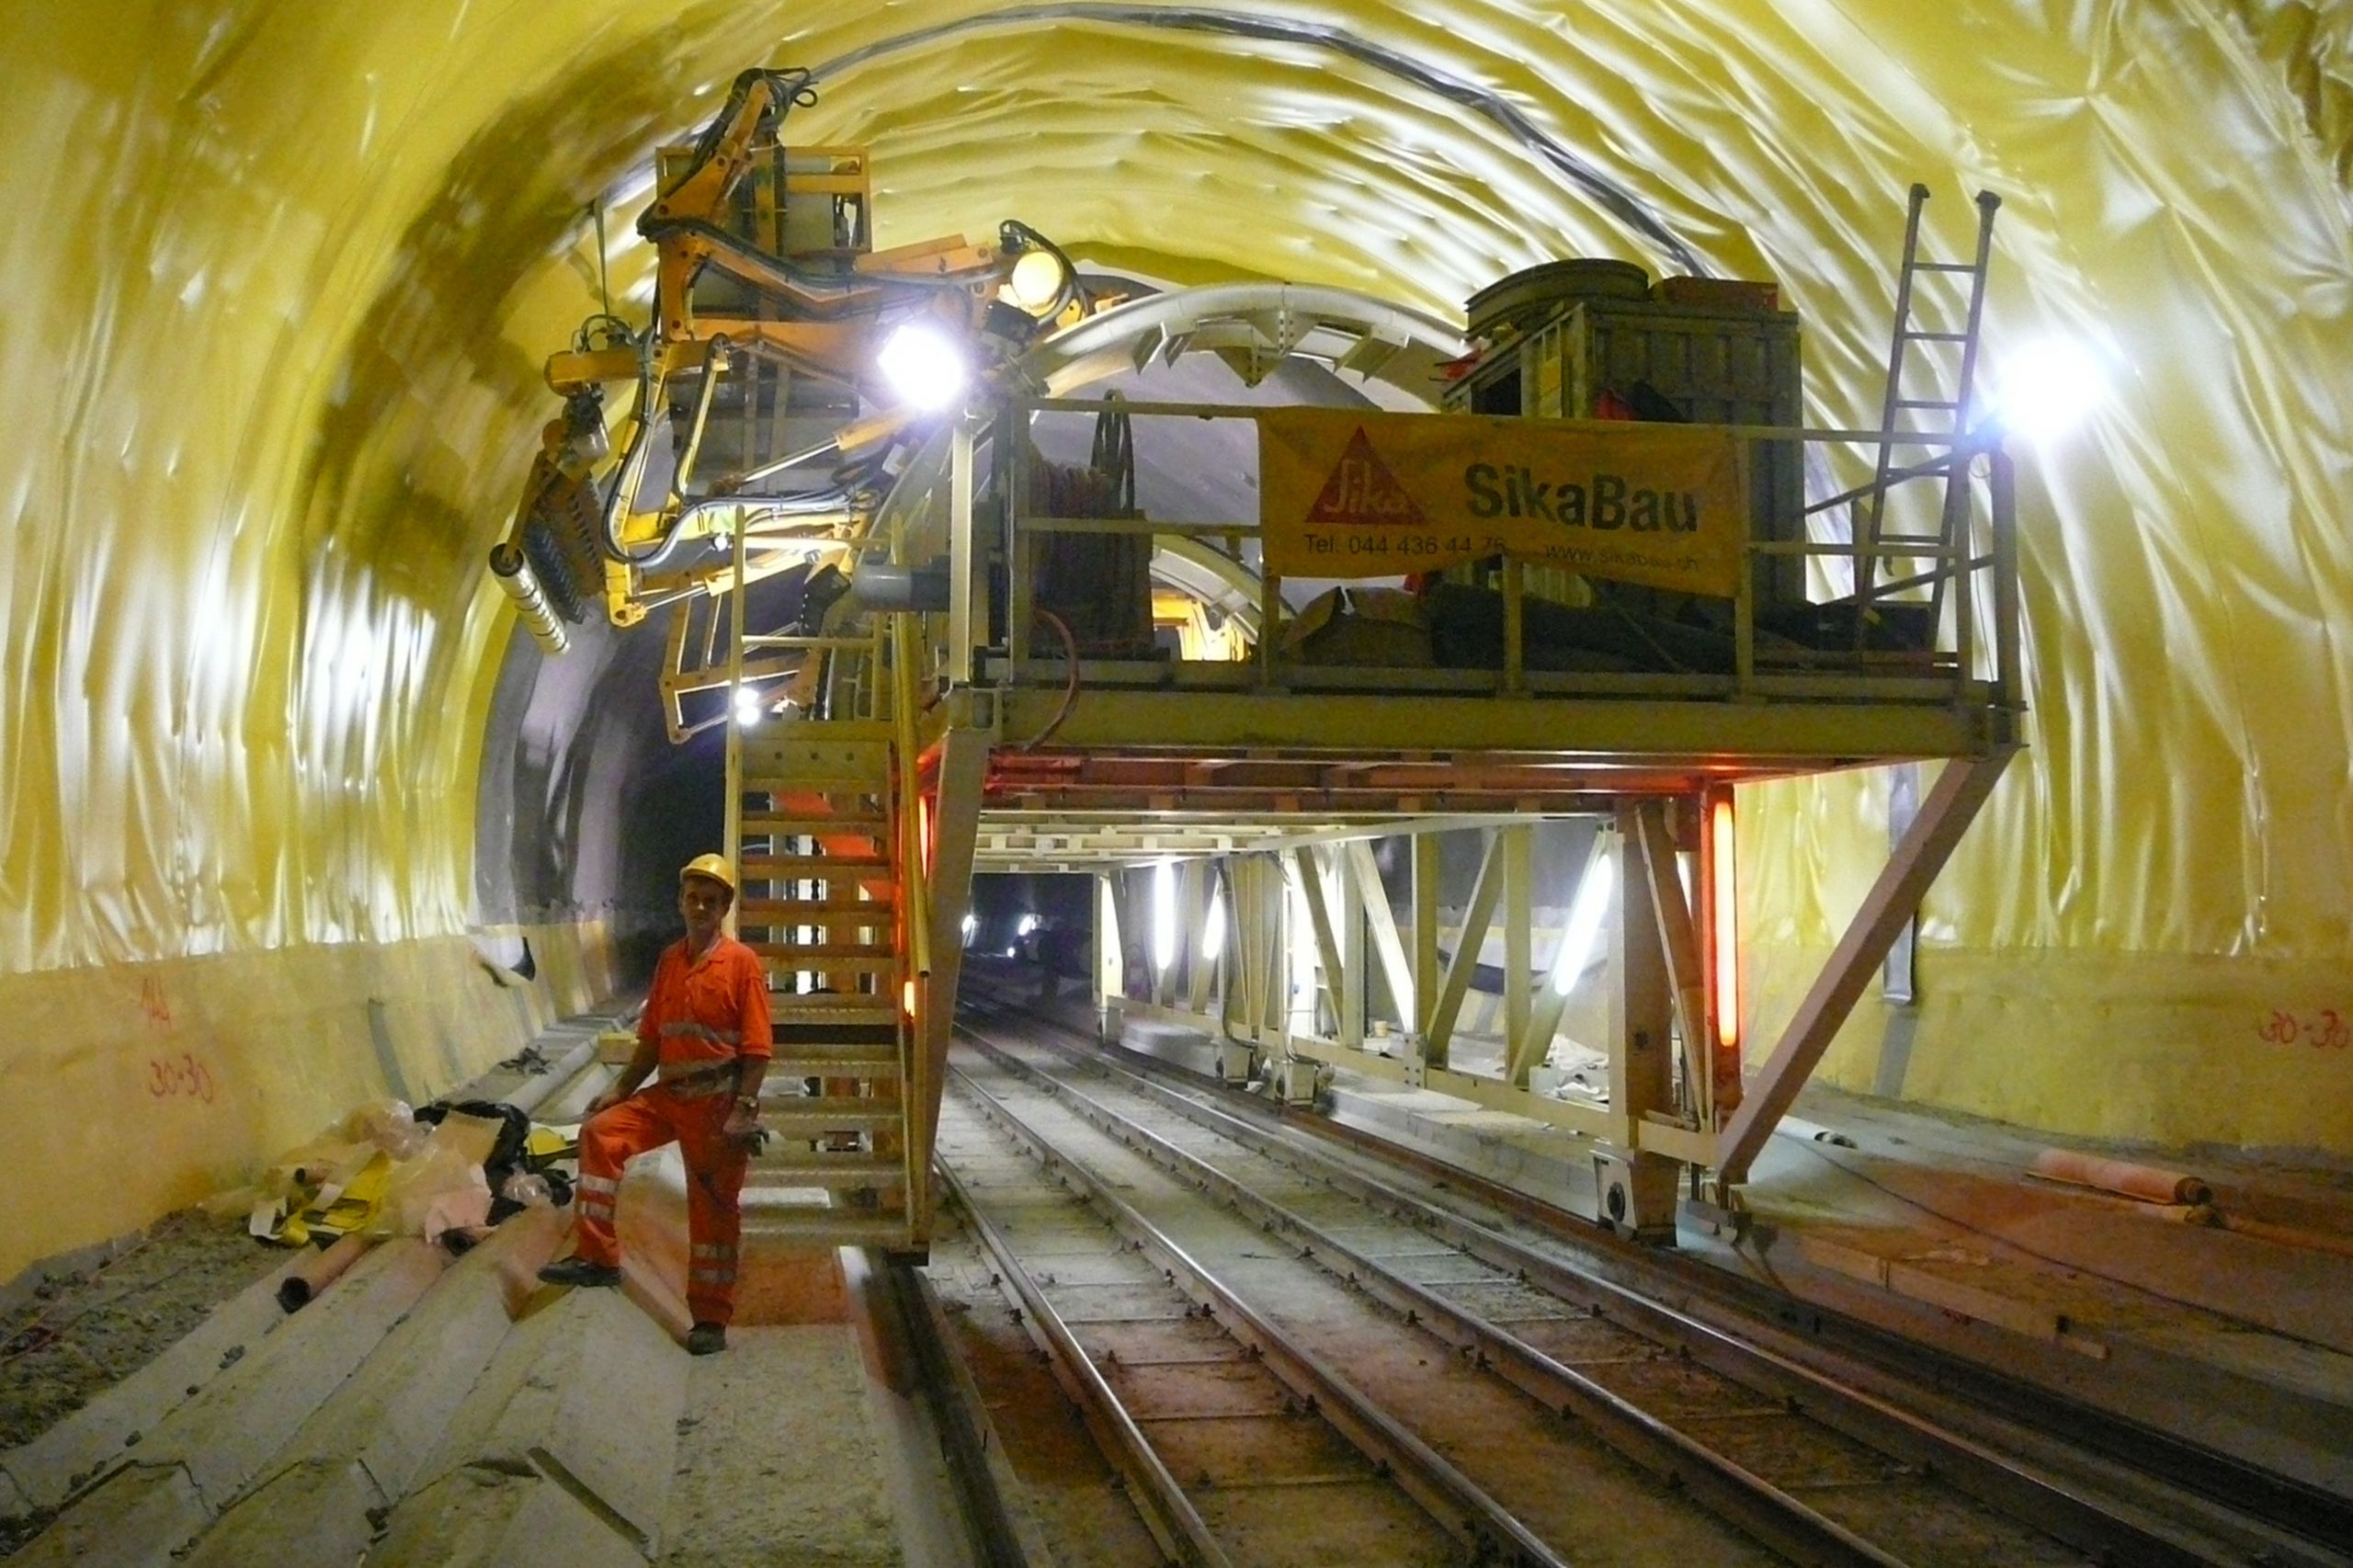 Waterproofing with Sikaplan membrane Gotthard Tunnel in Switzerland